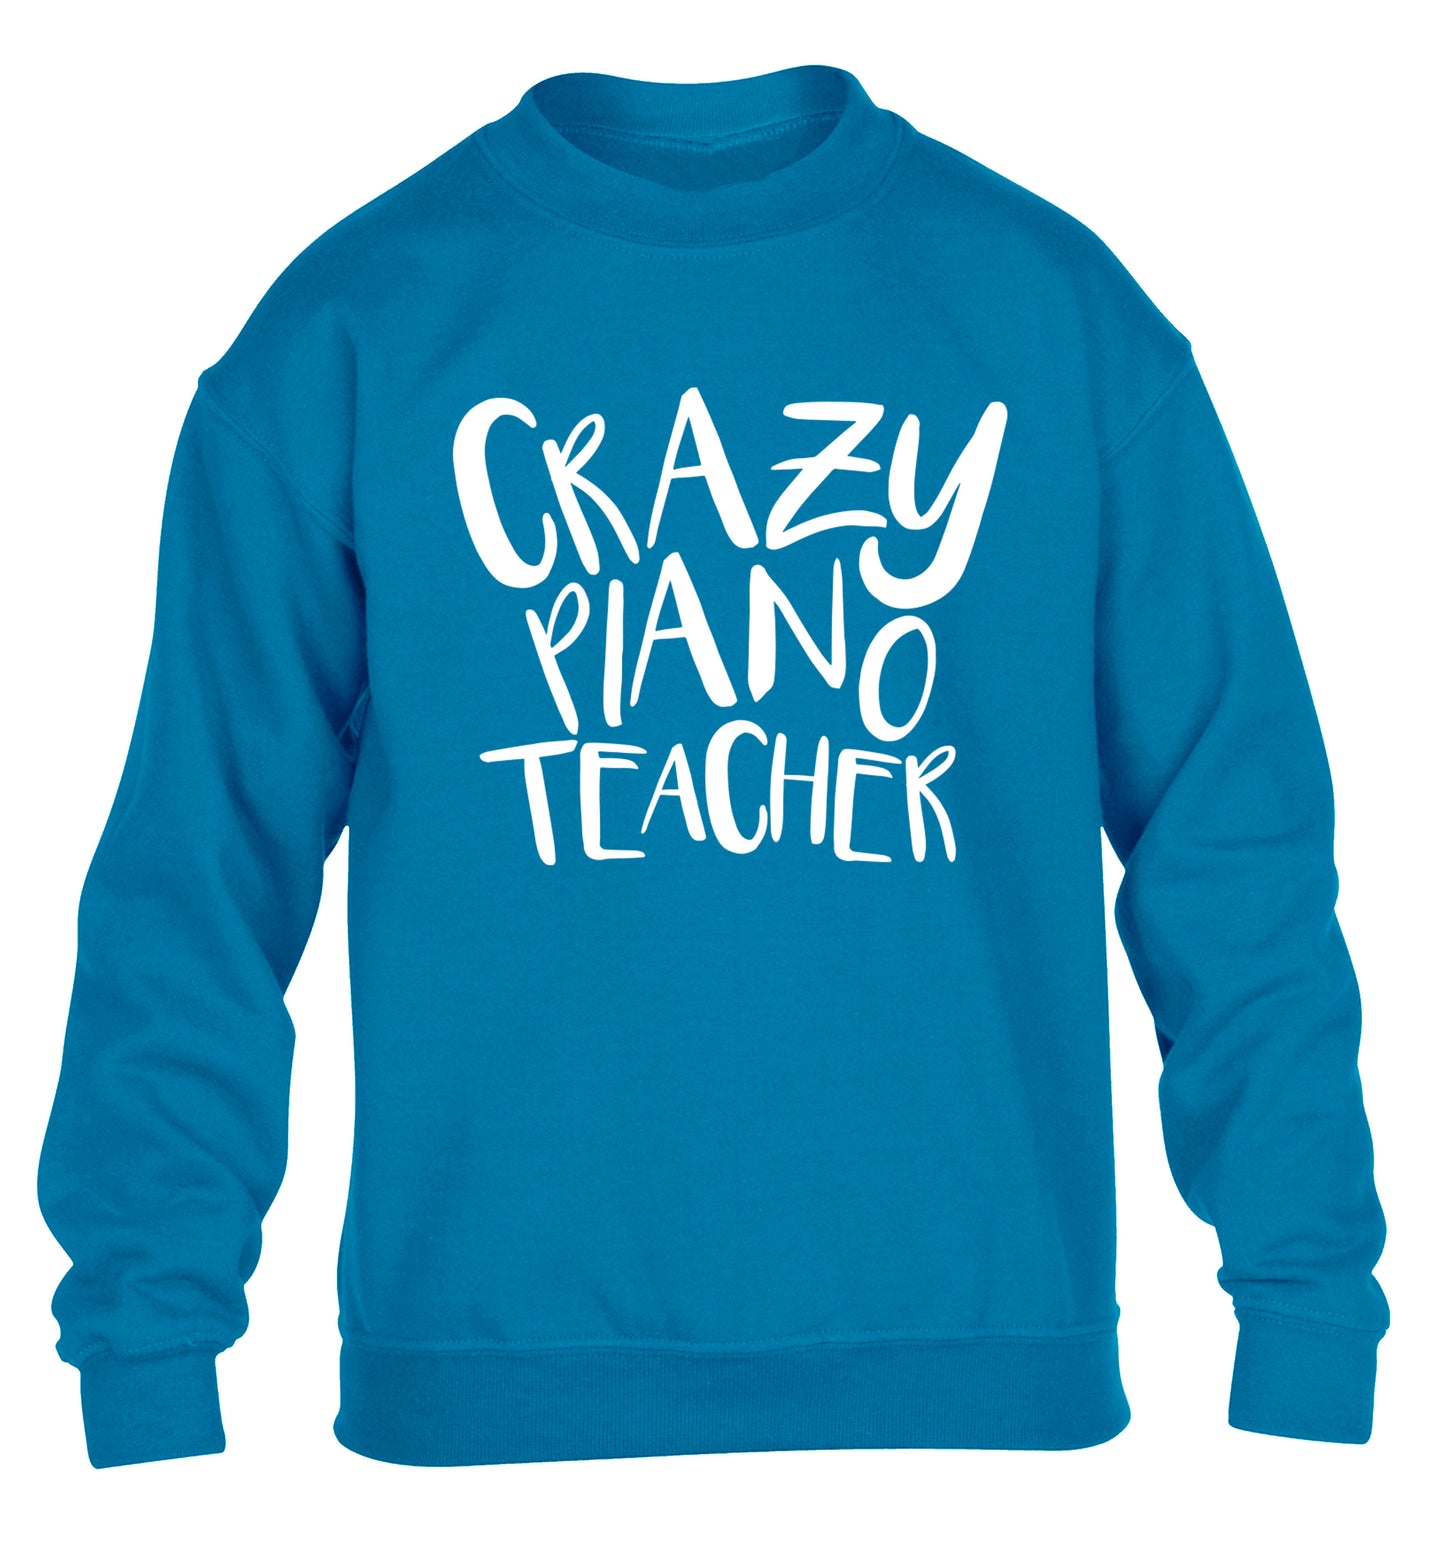 Crazy piano teacher children's blue sweater 12-13 Years